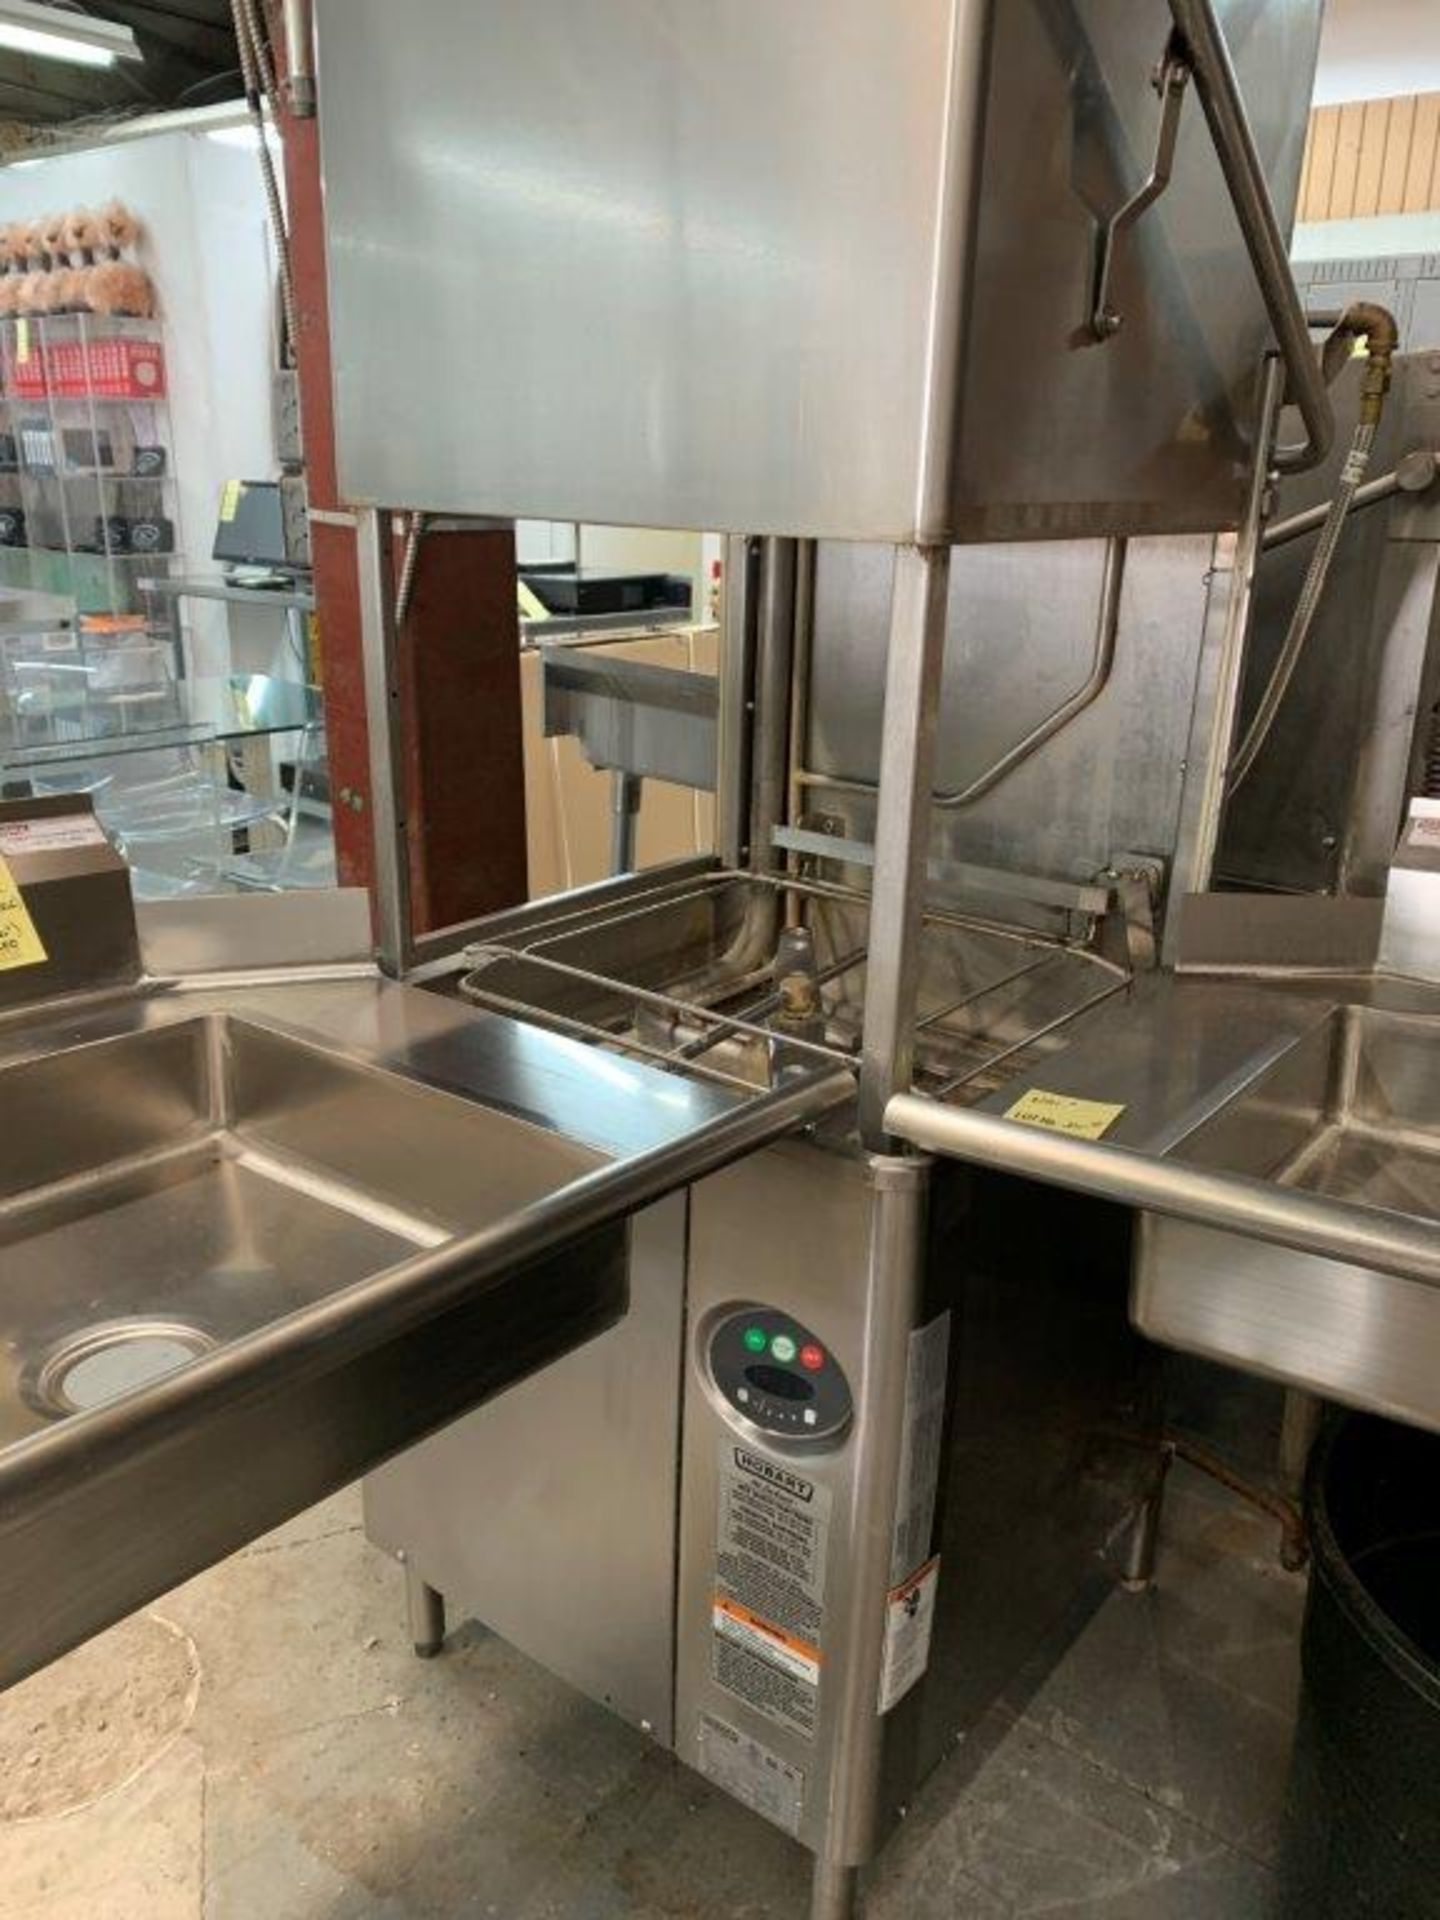 Beau Lave vaisselle commerciale HOBART # AM-15 -AM select - moderne - Image 5 of 8